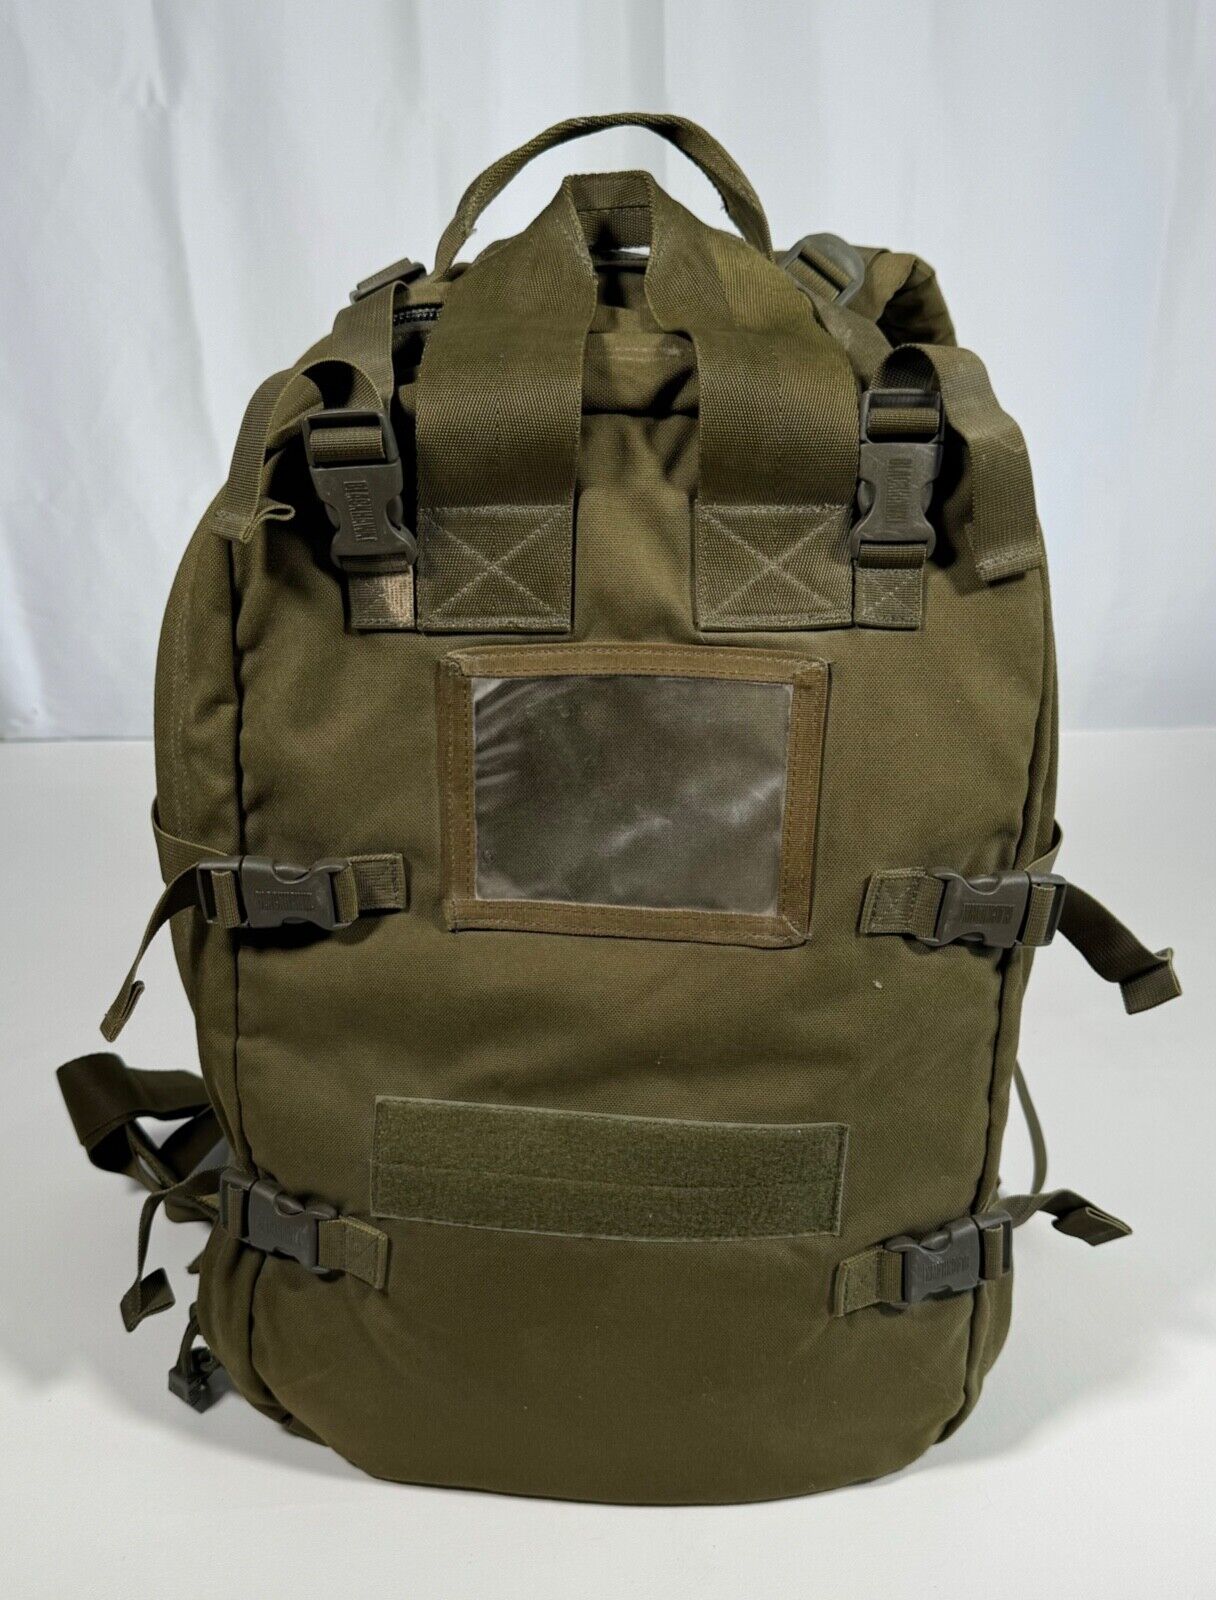 Blackhawk STOMP II Medical Cover Jumpable Assault Pack Backpack OD Green LOADED